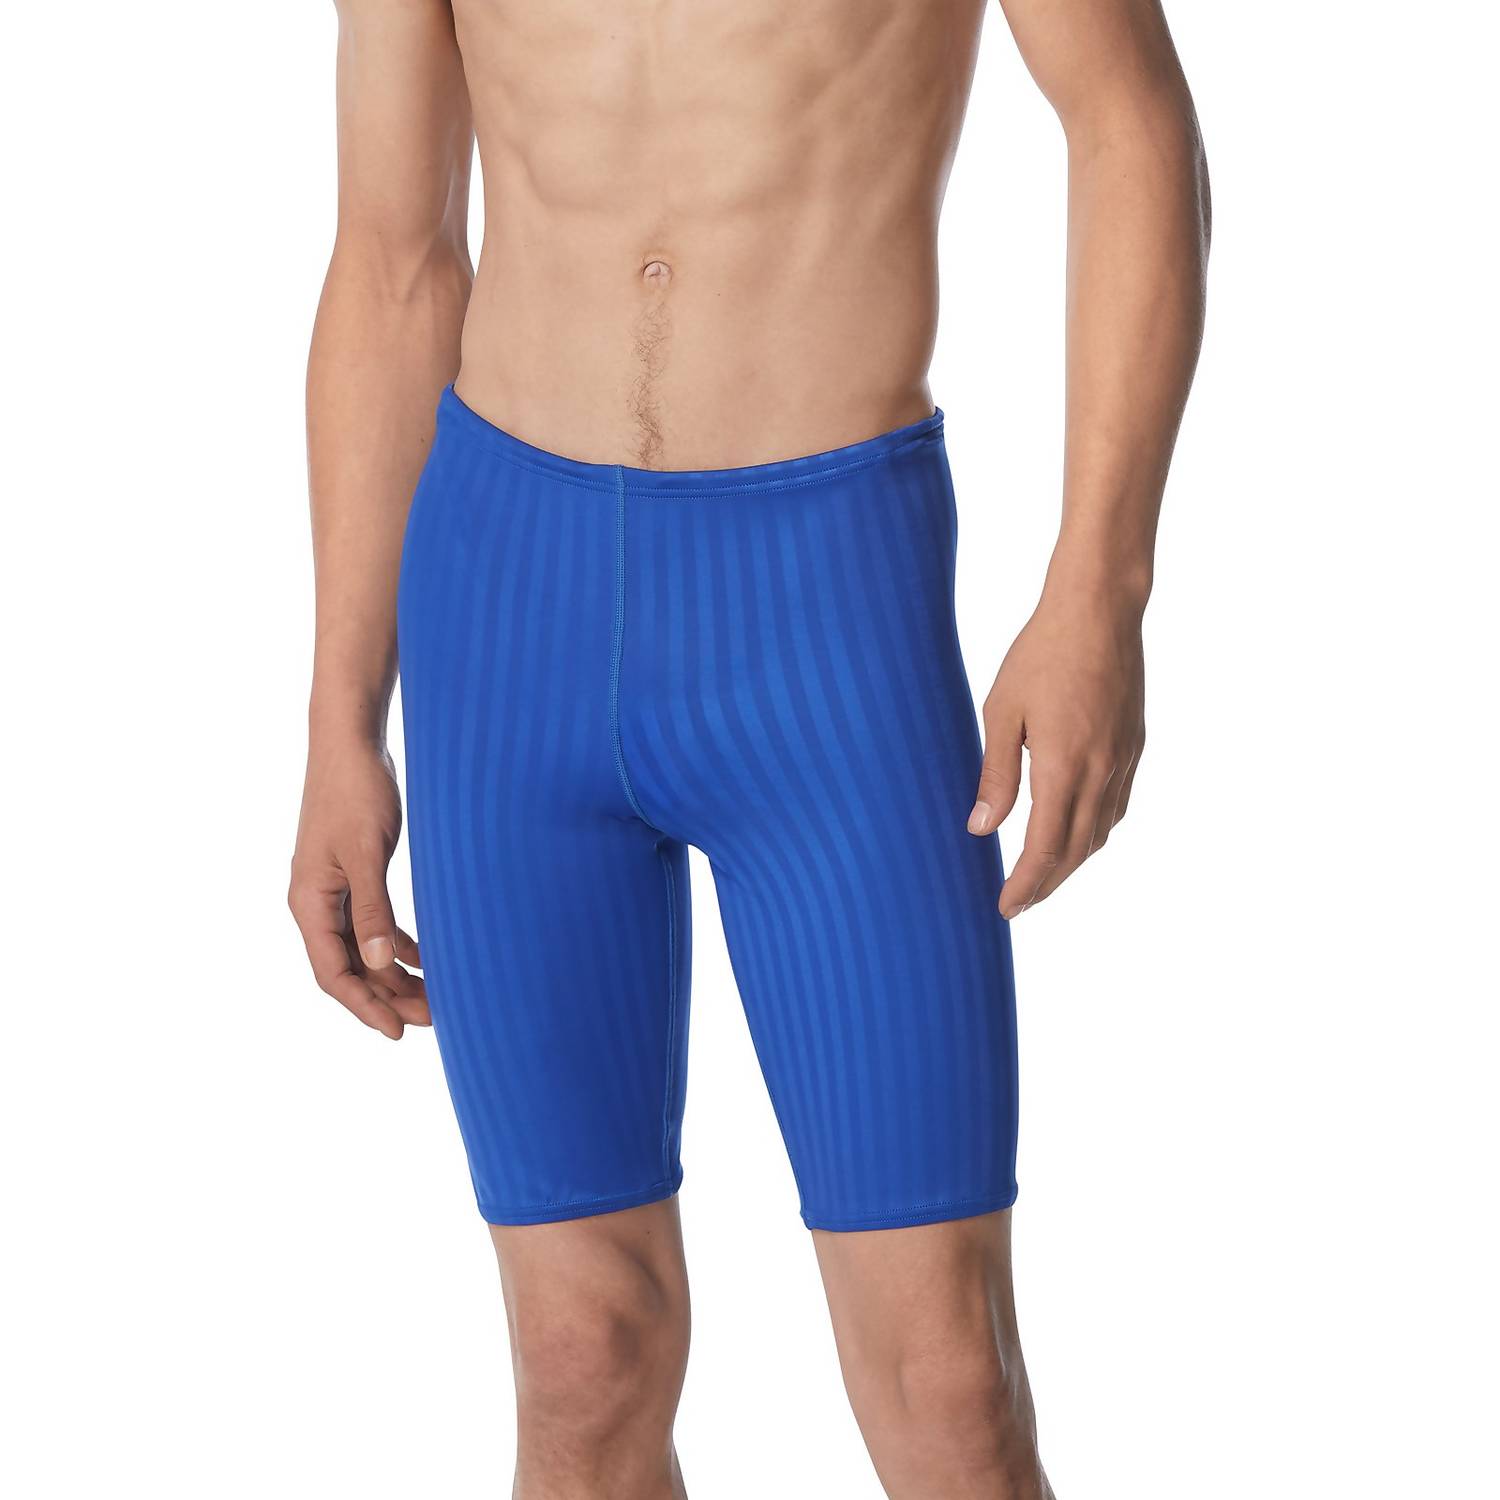 Speedo Elite Suits Sale: Men's Aquablade Adult Jammer $55.30, Girls' Aquablade Recordbreaker One Piece $62.29 & More + Free Shipping